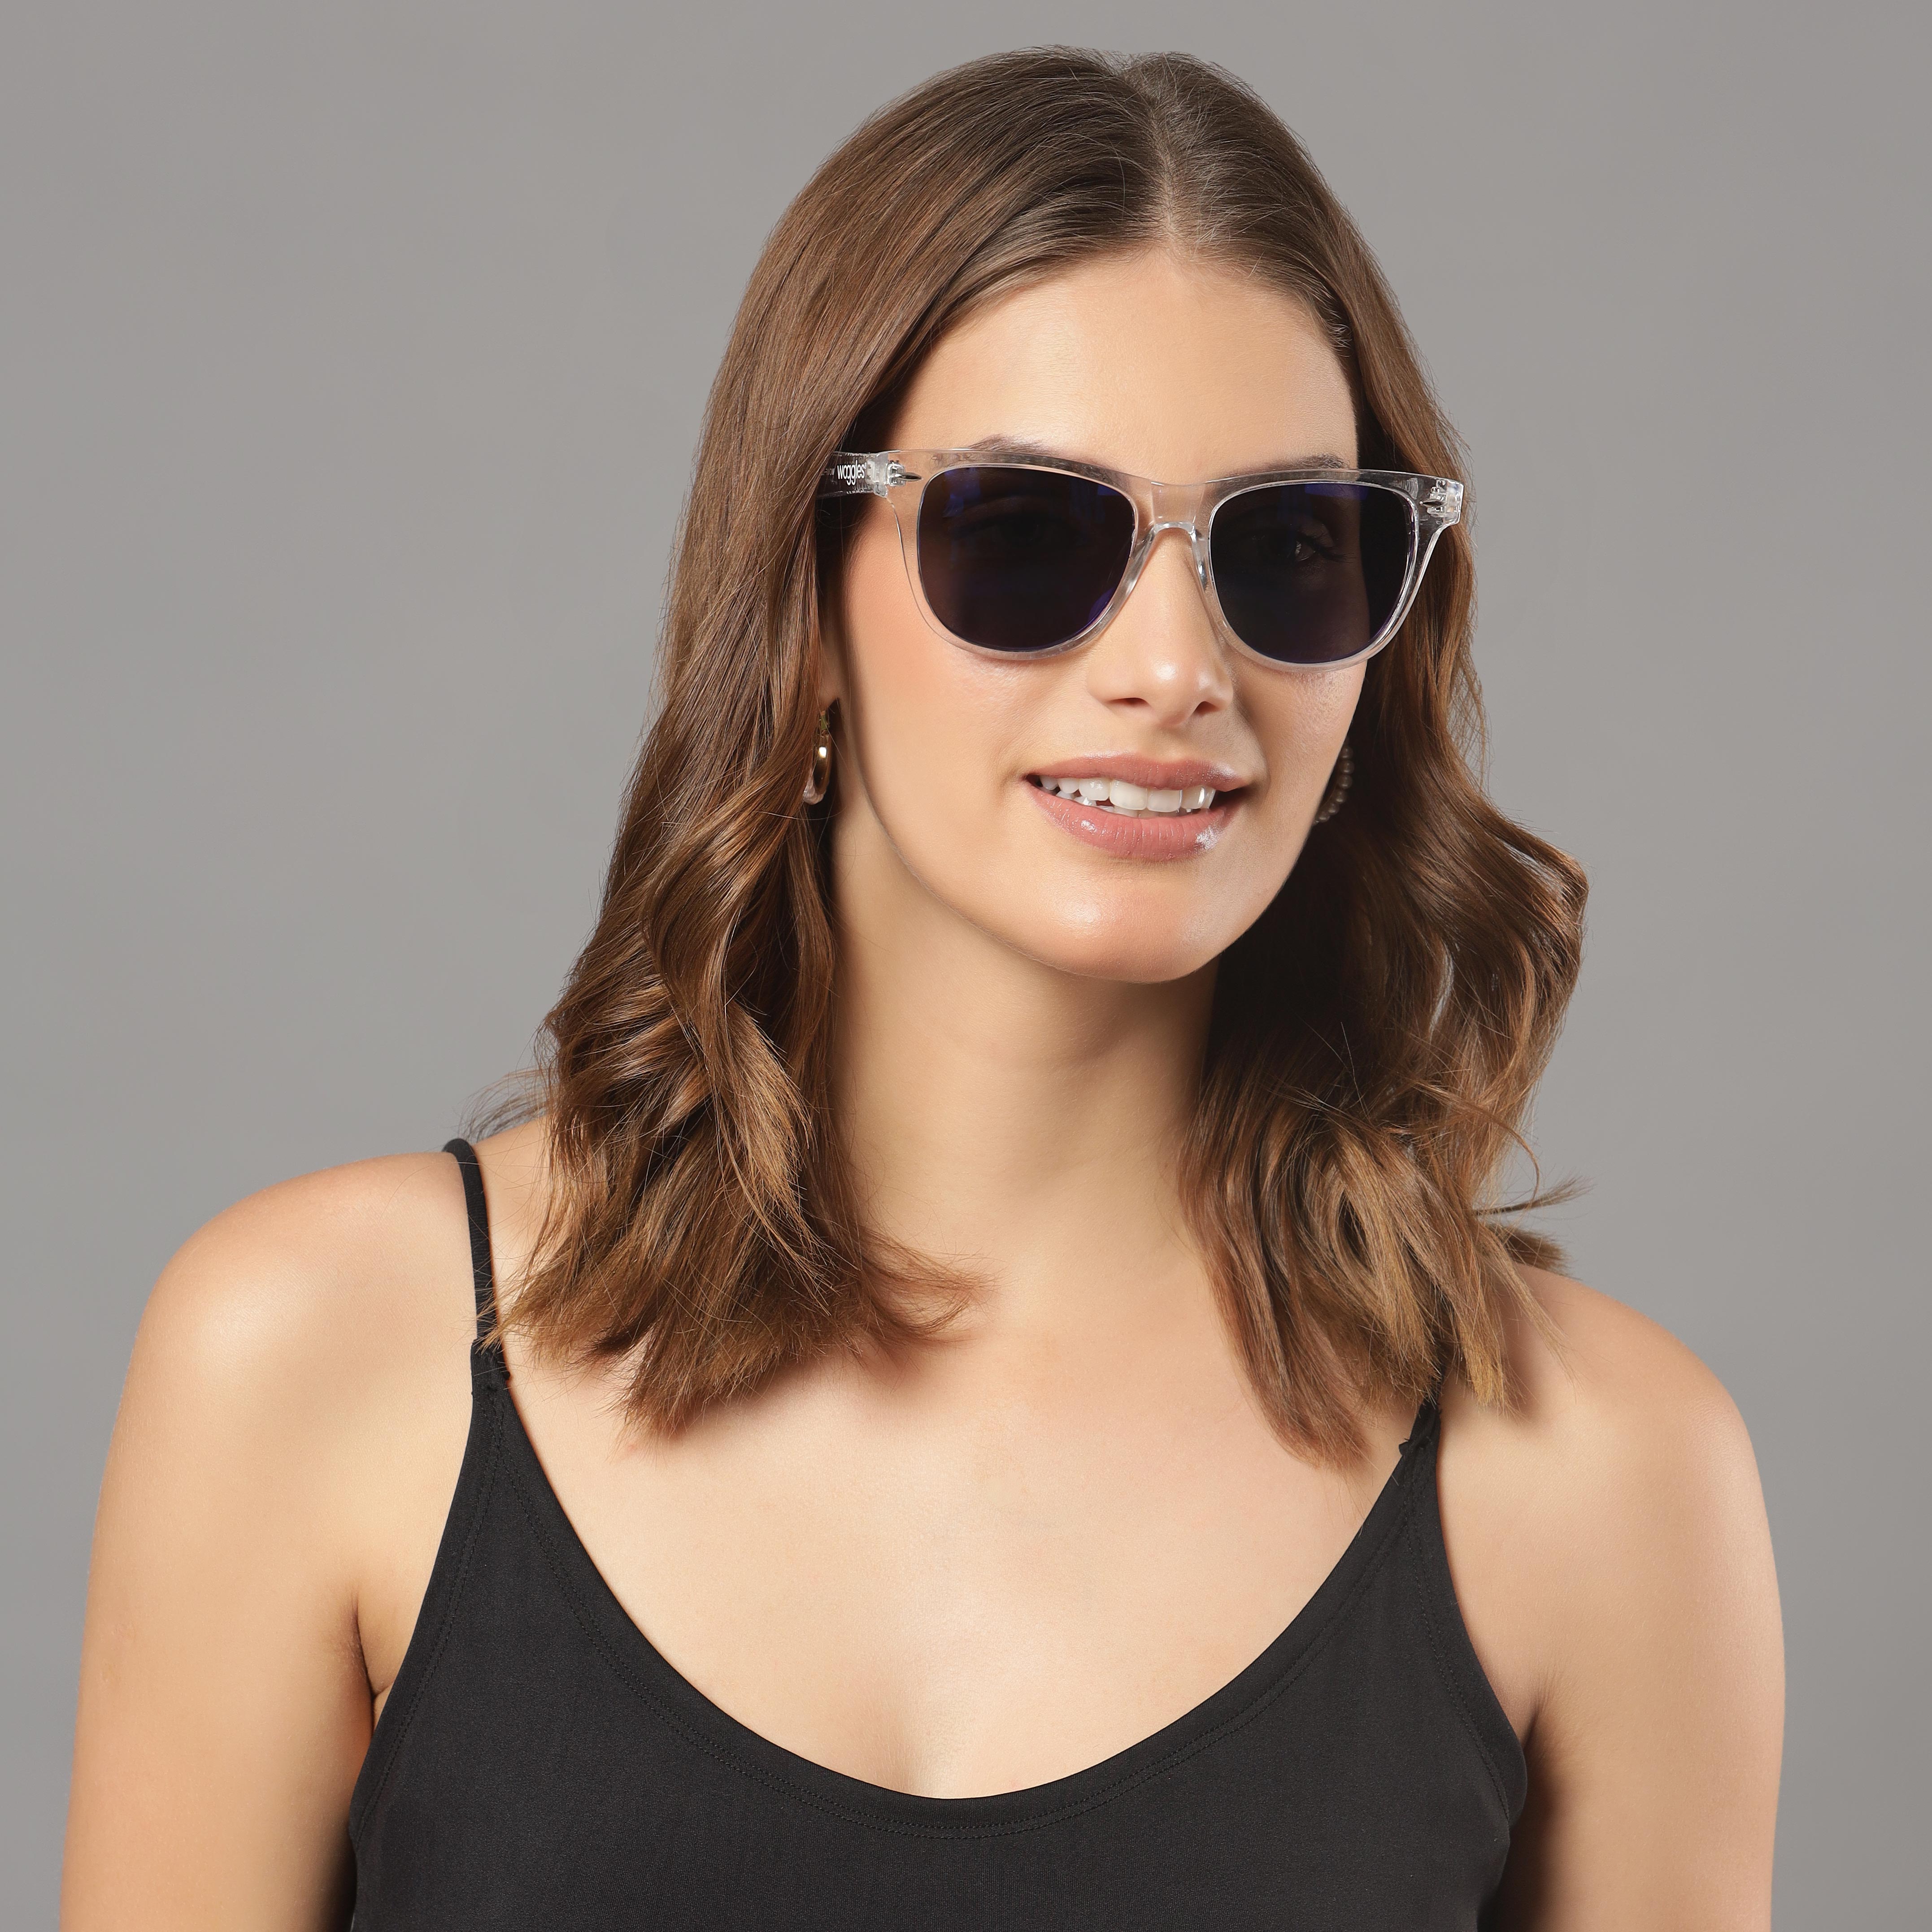 Buy Oceanic Vision Polarized Wayfarer Sunglasses Woggles